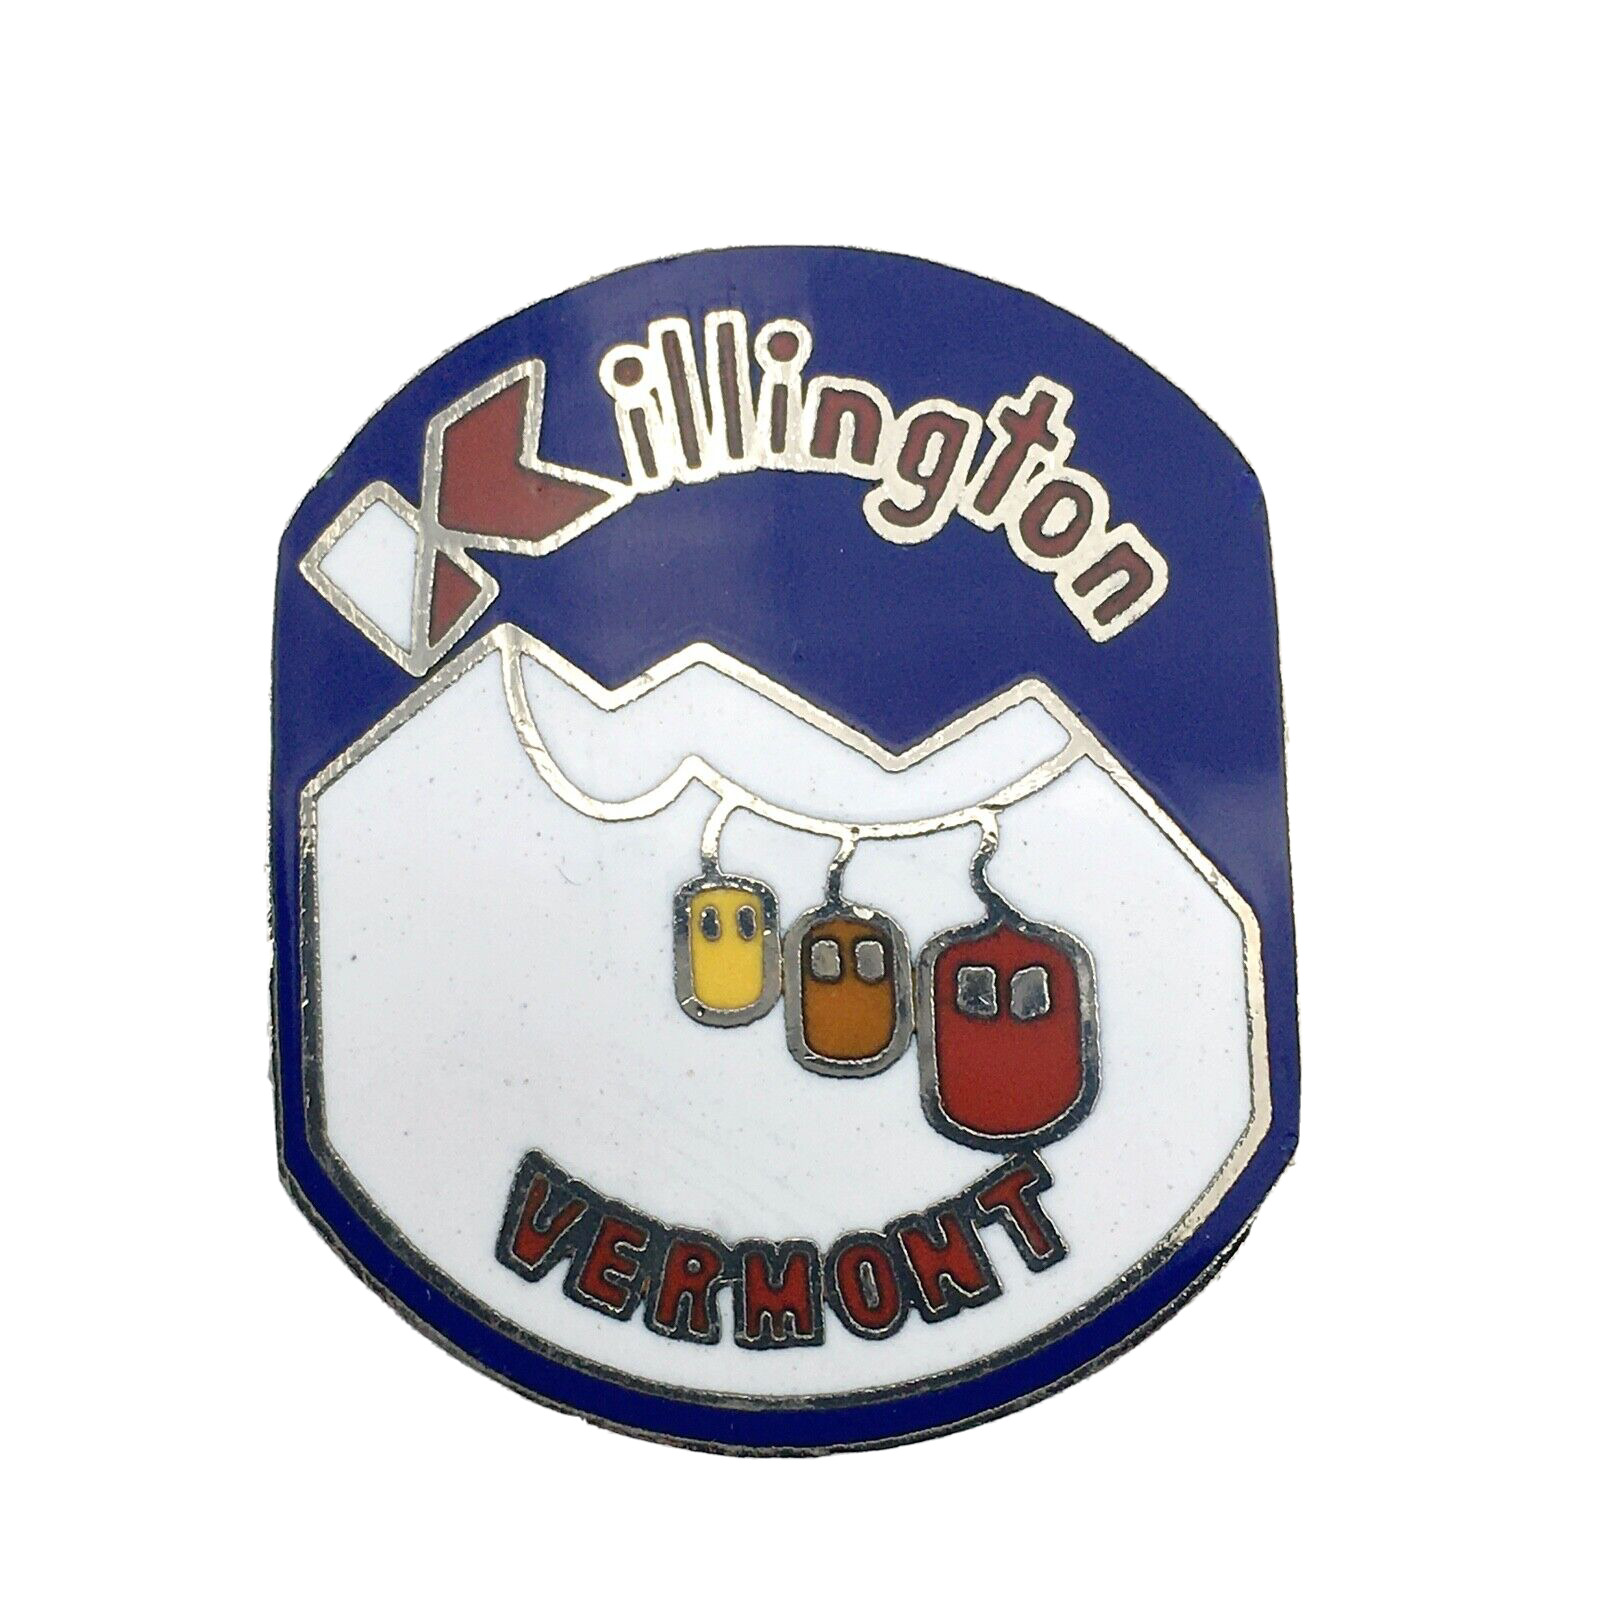 KILLINGTON VT enamel metal pin - vintage ski resort gondola lapel hat souvenir